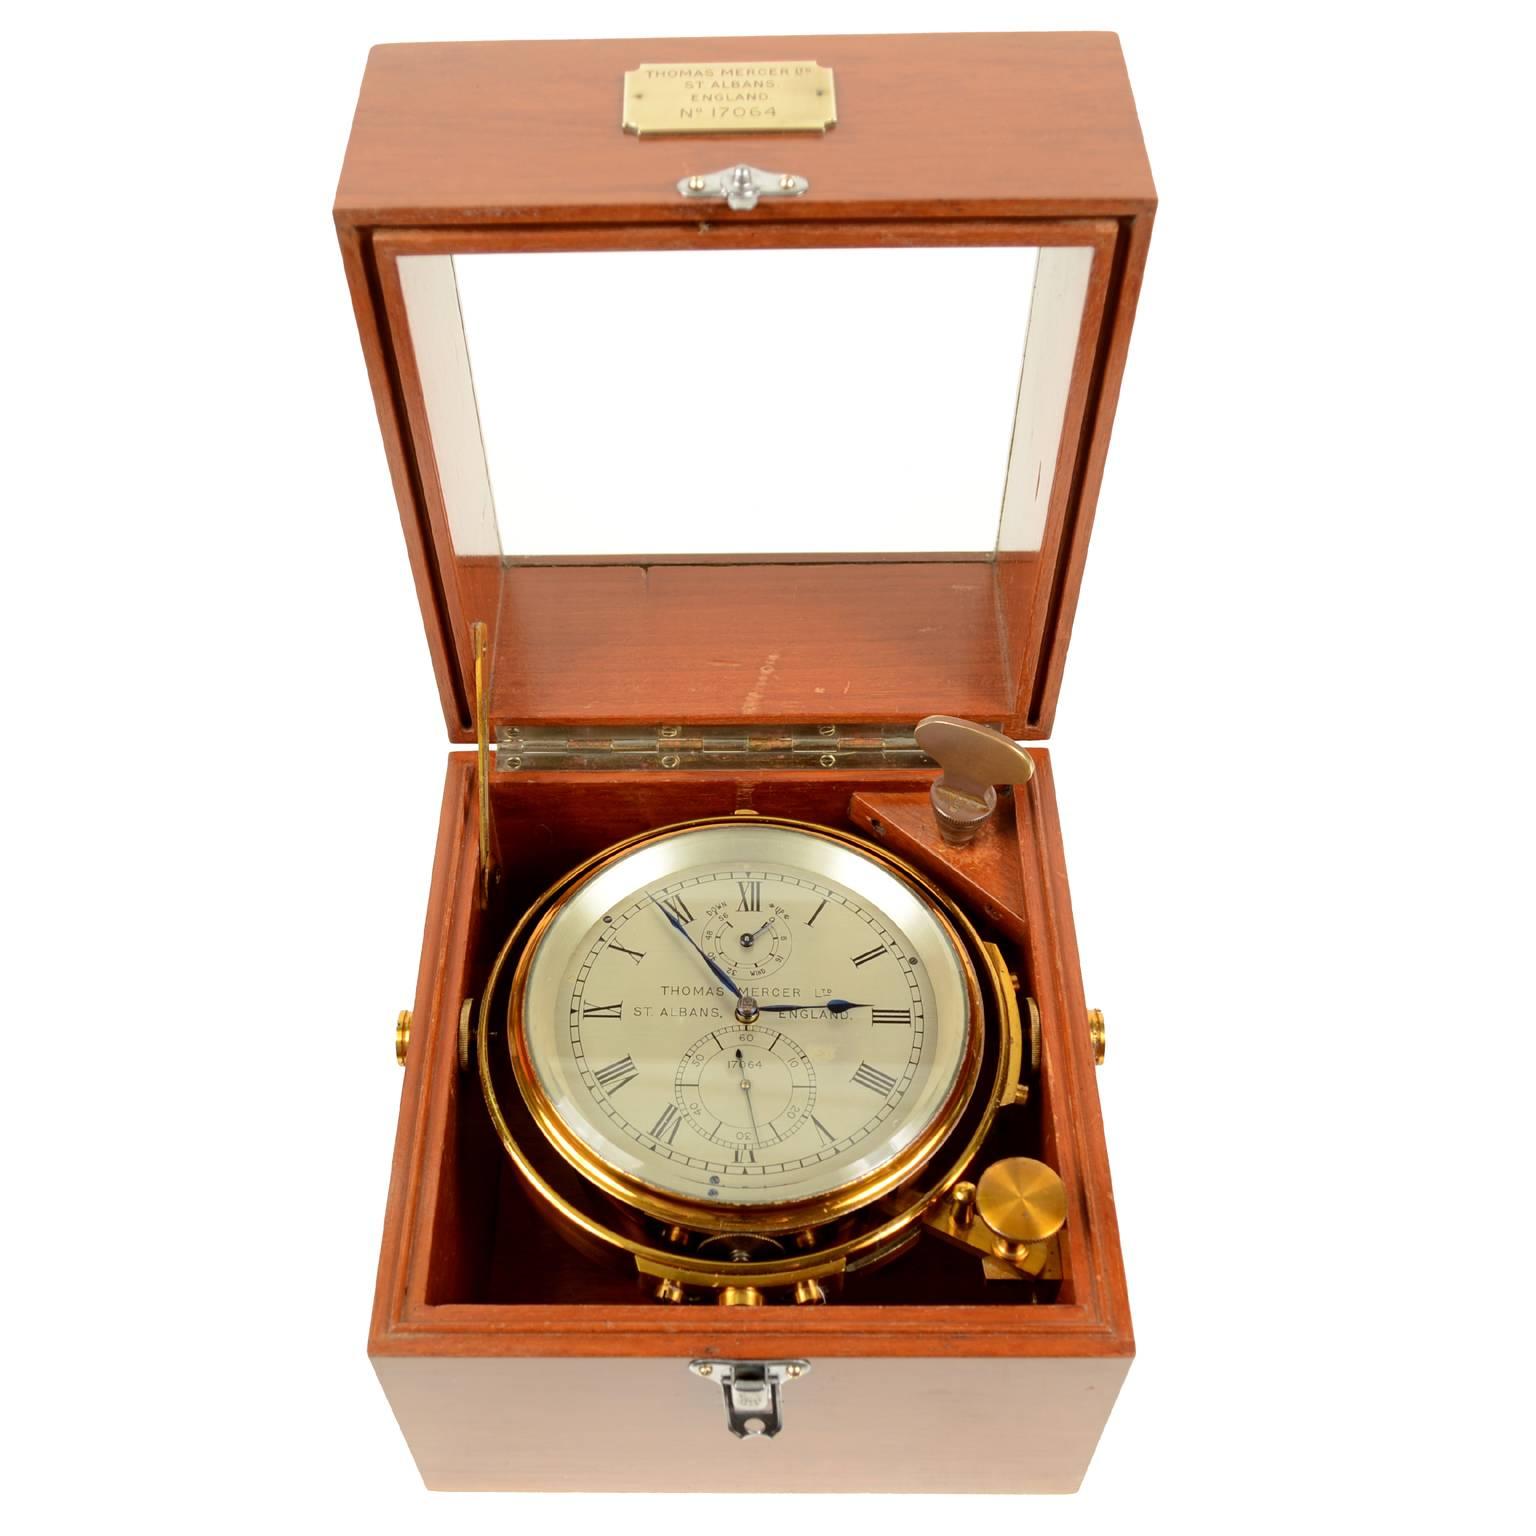 Marine Chronometer Signed Thomas Mercer Ltd.